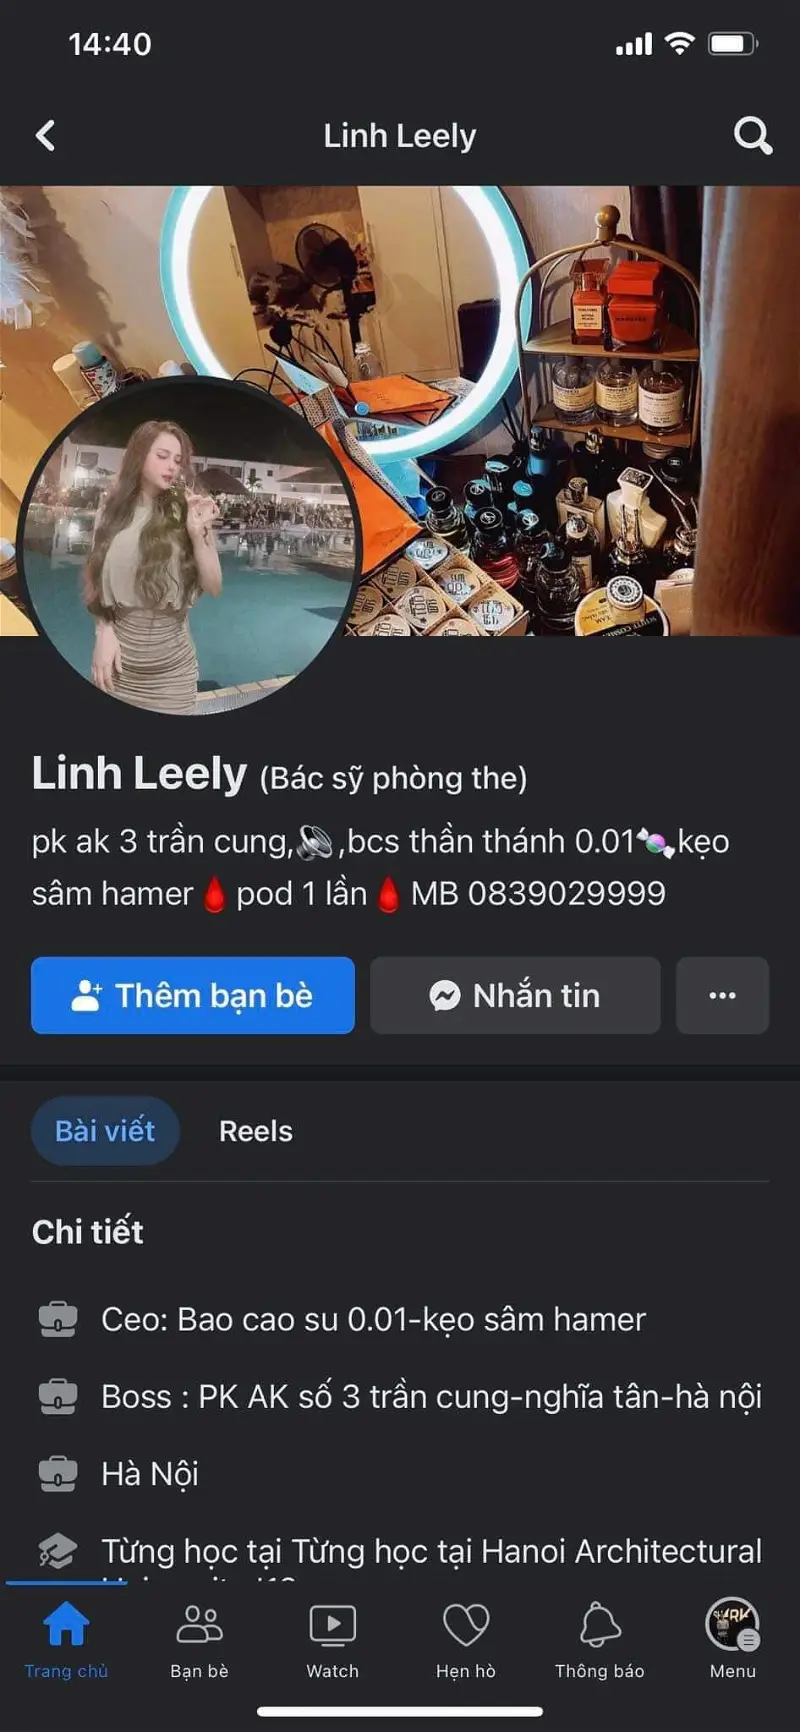 Linh Leely